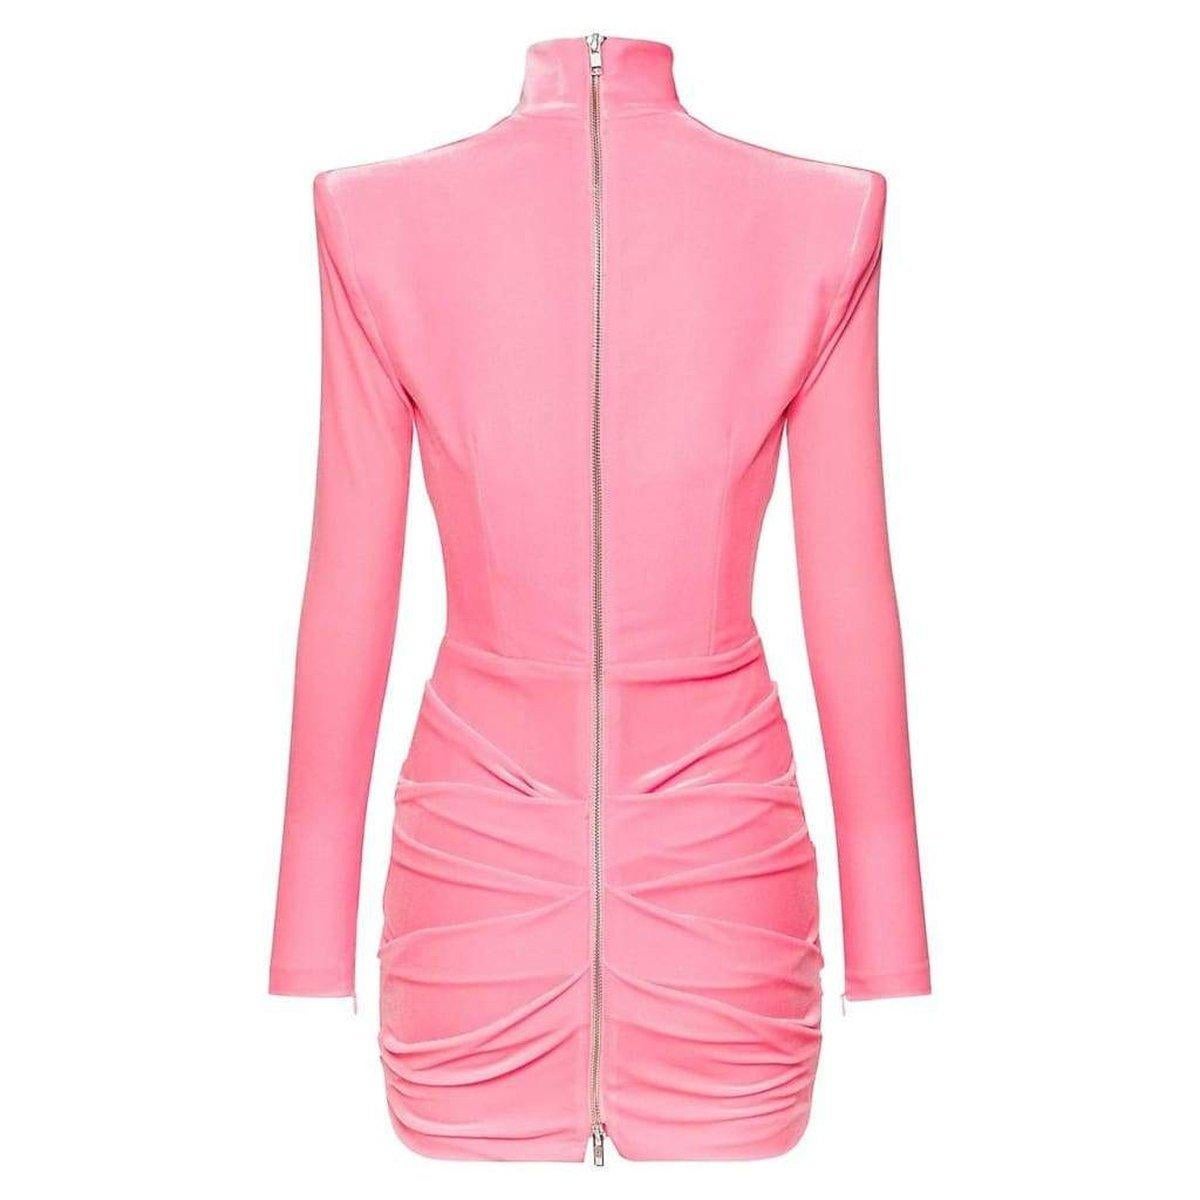 alex perry pink sequin dress